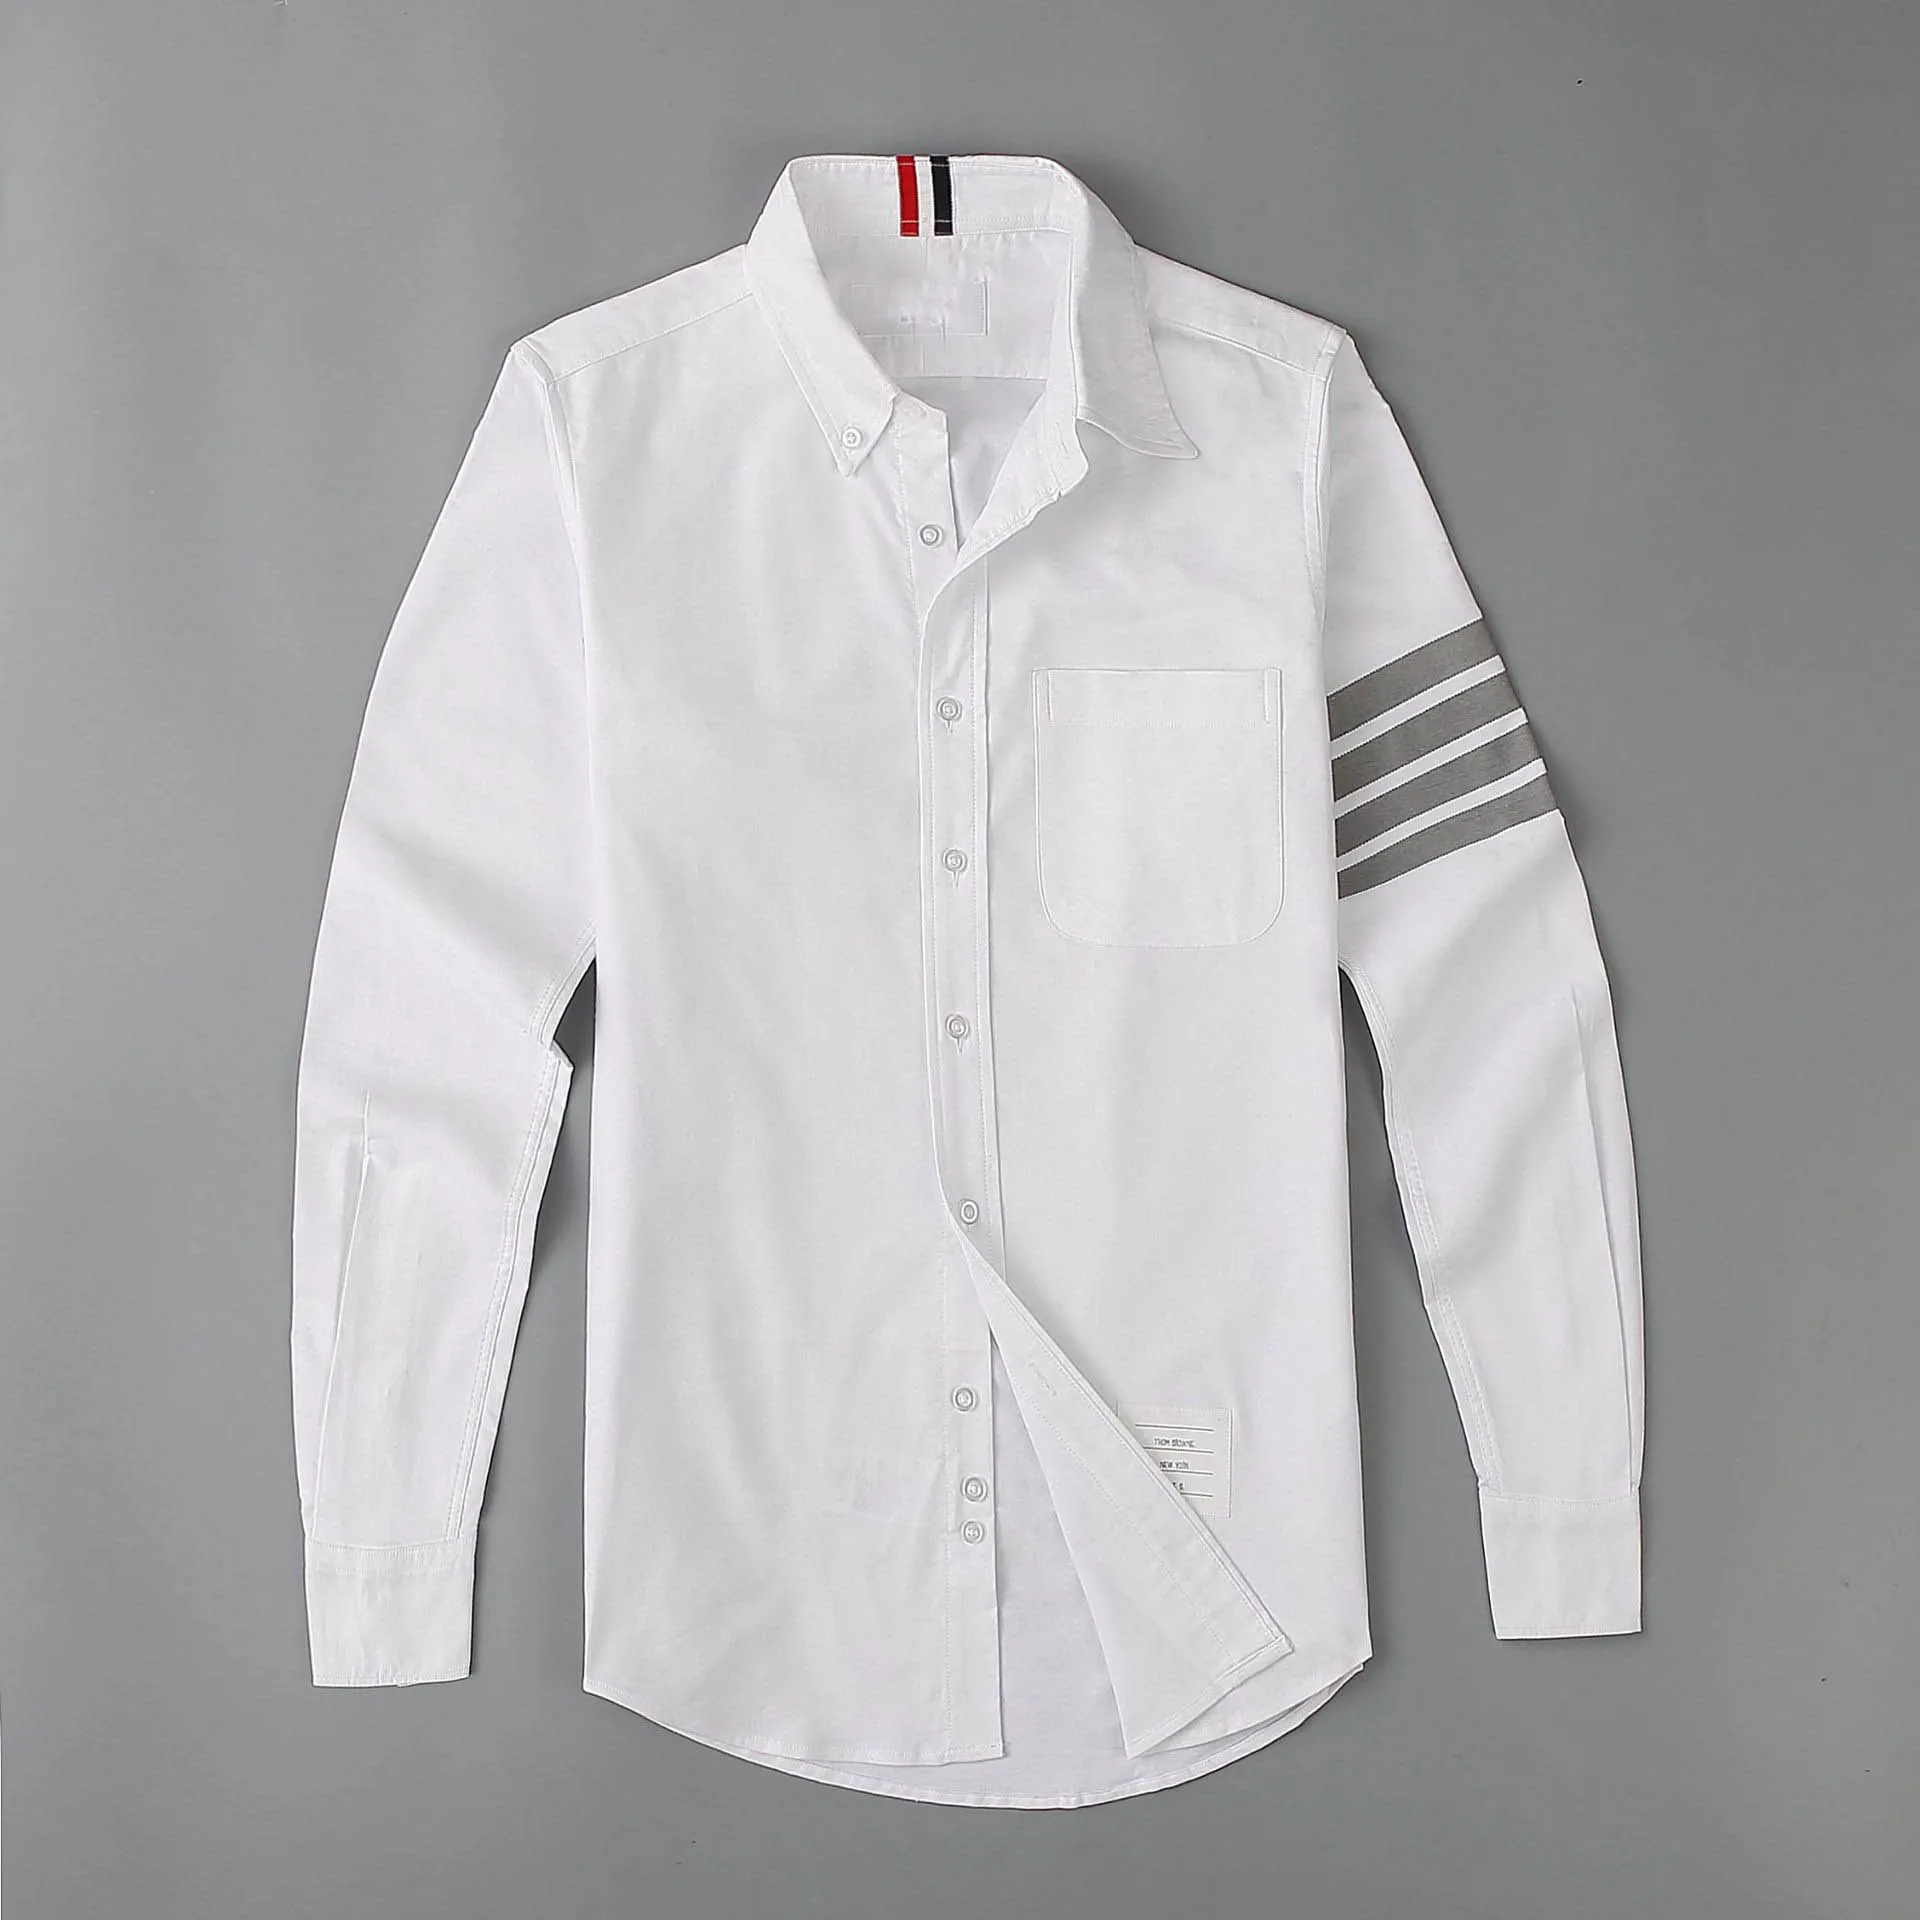 

Xfhh New 19ss Men Oxford Classic Grey stripe Fashion Cotton Casual Shirts Shirt high quality Pocket long-sleeves Top M 2XL #M49